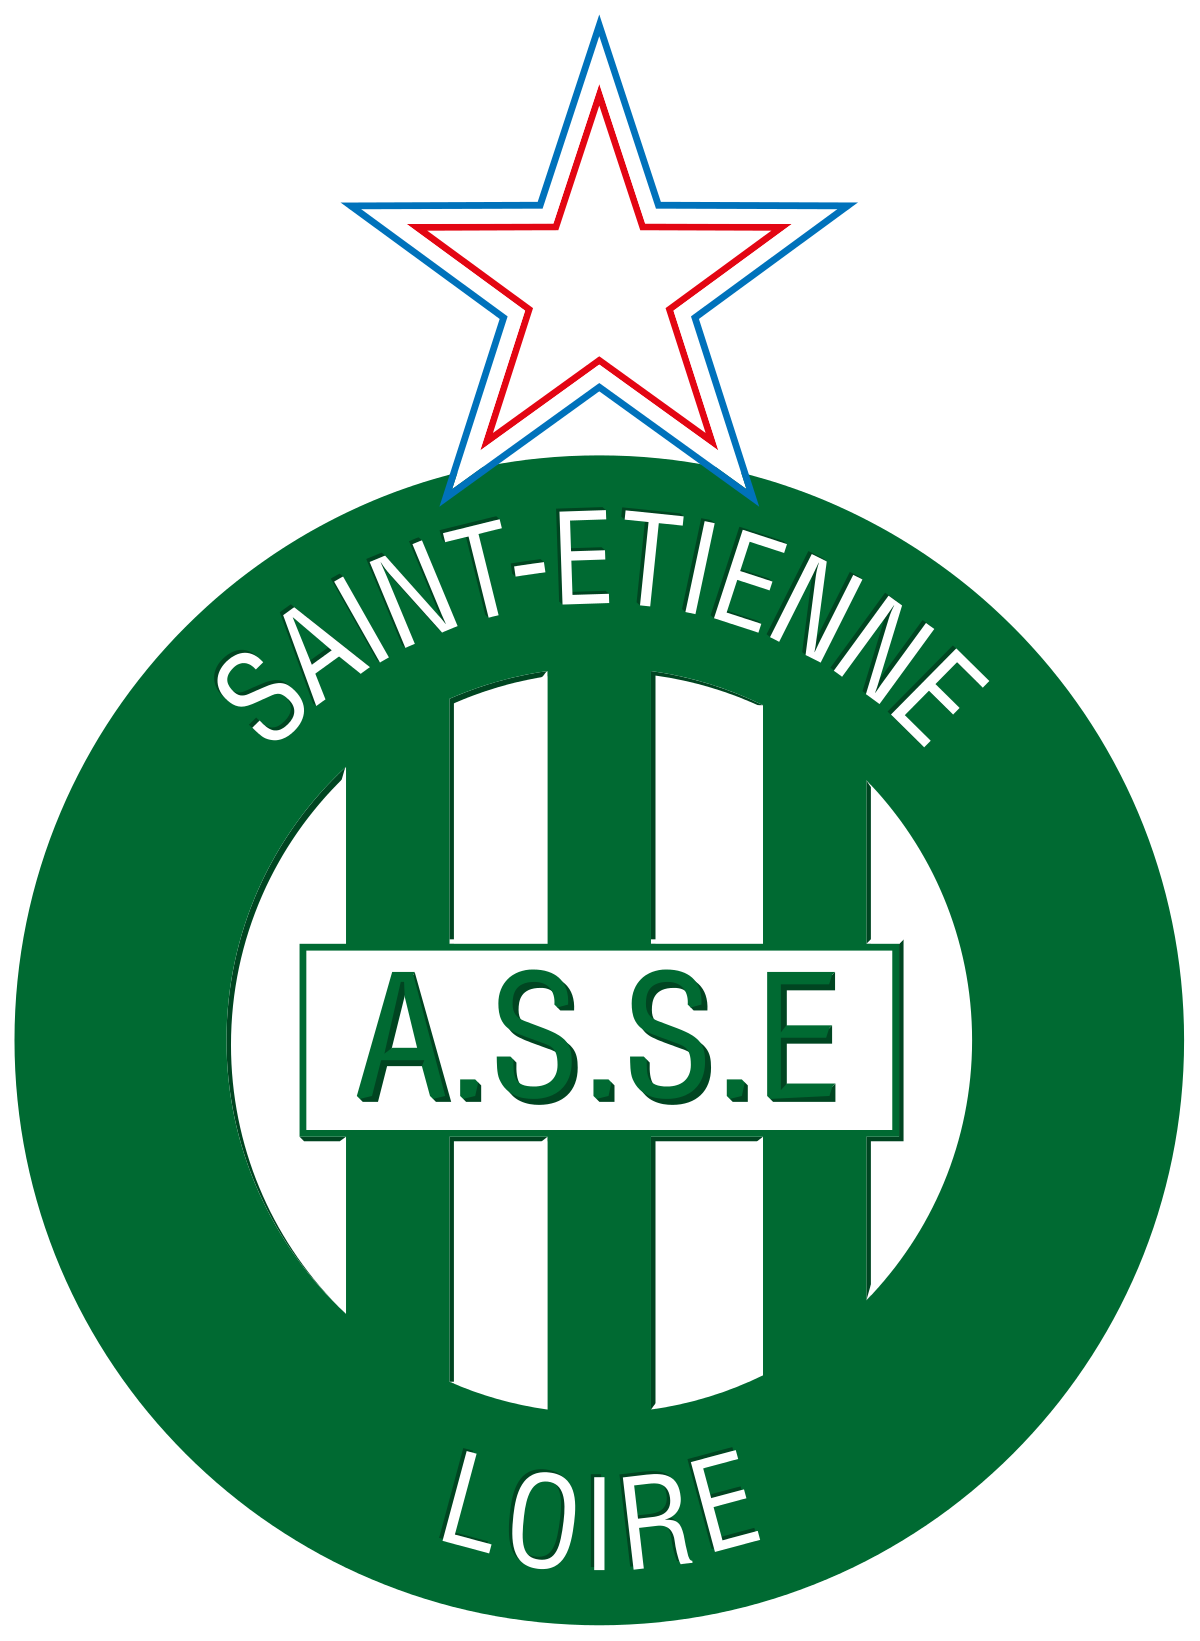 Saint-Etienne-2 logo